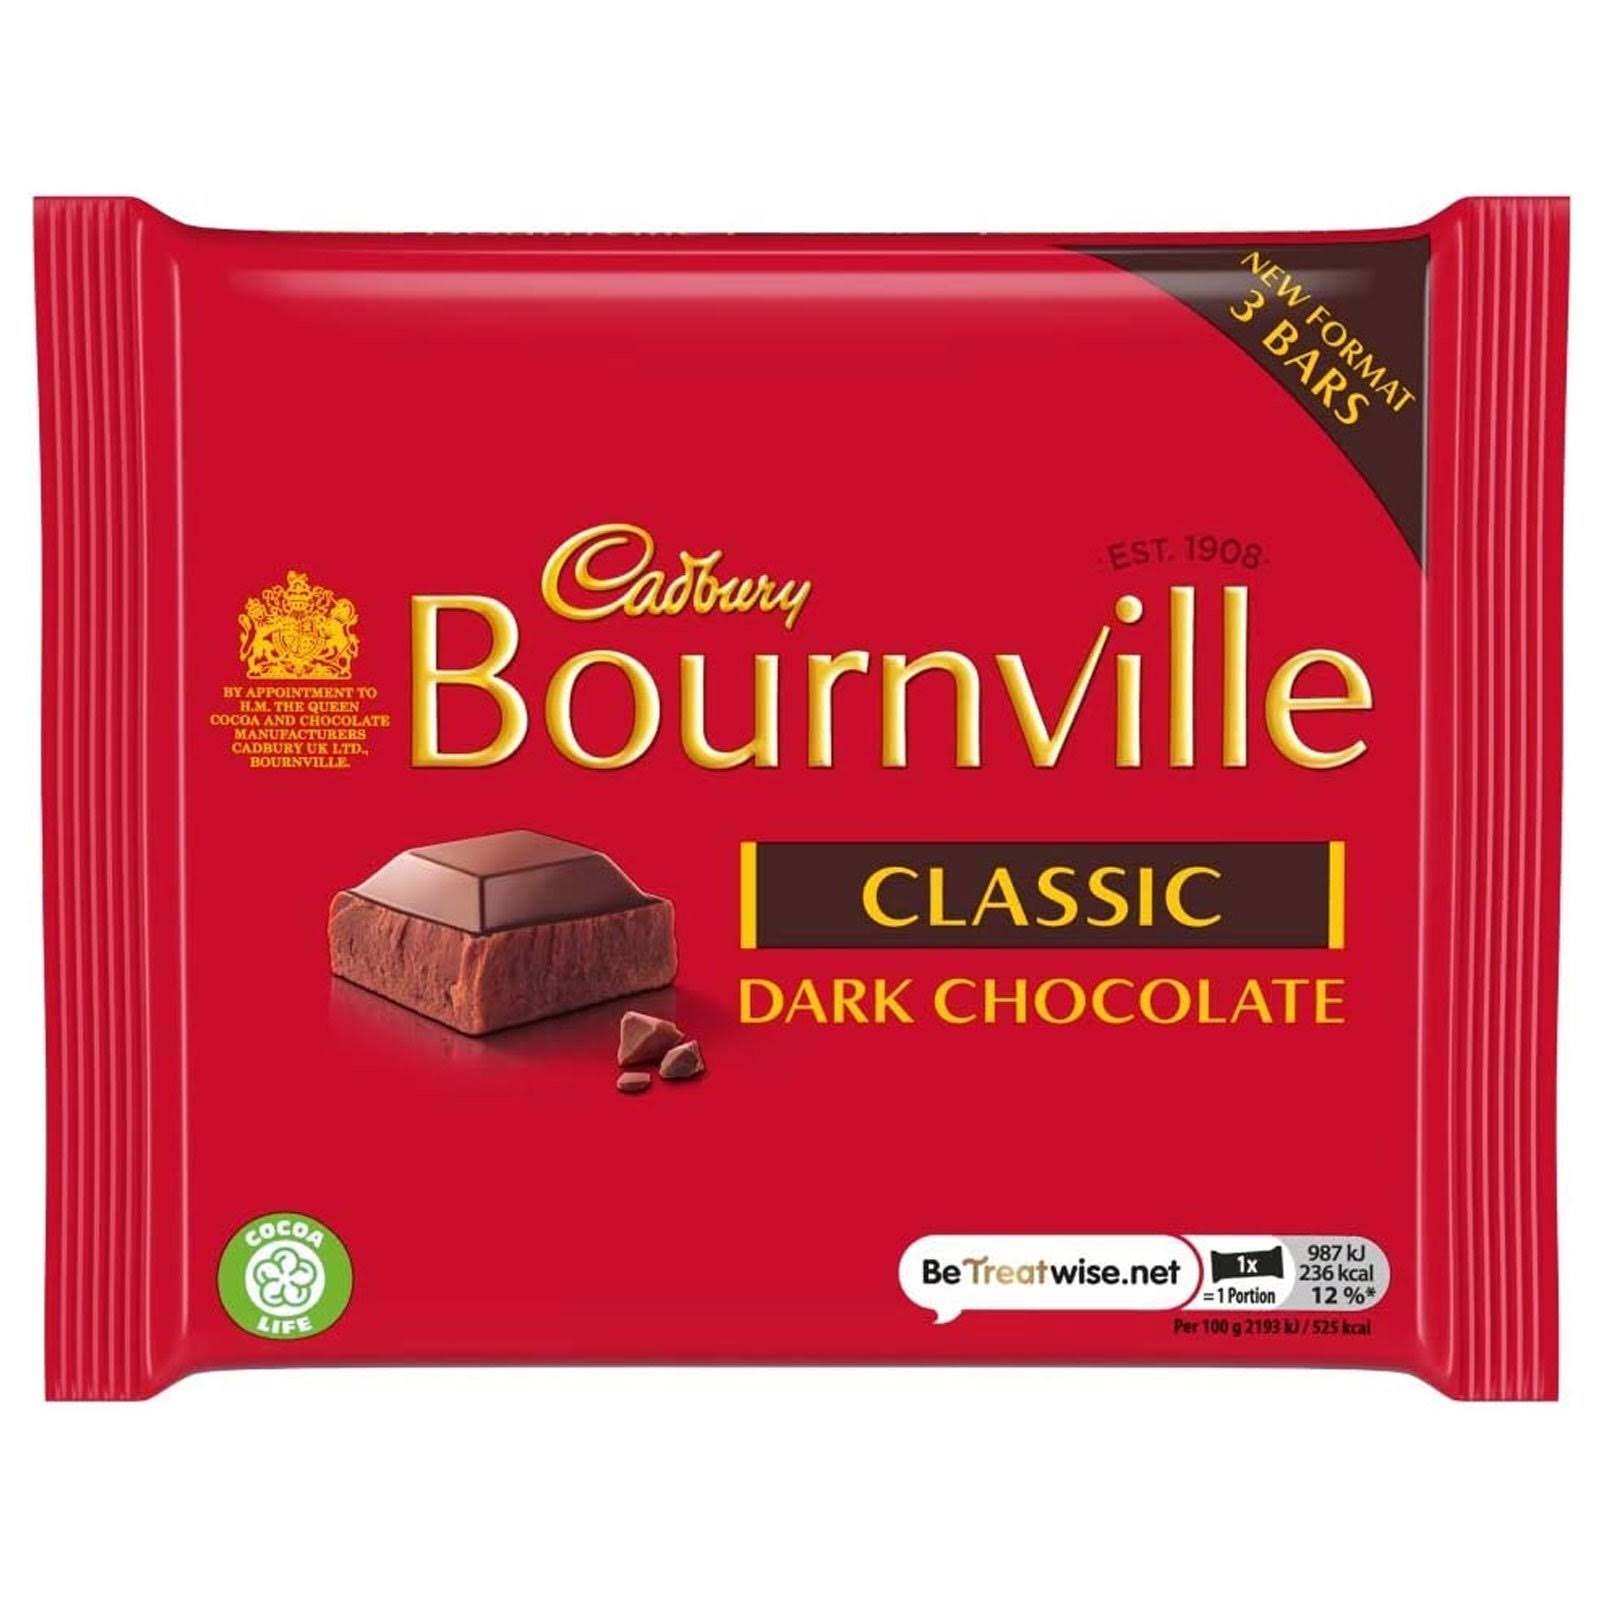 Cadbury Bournville Dark Chocolate Classic 3 Pack